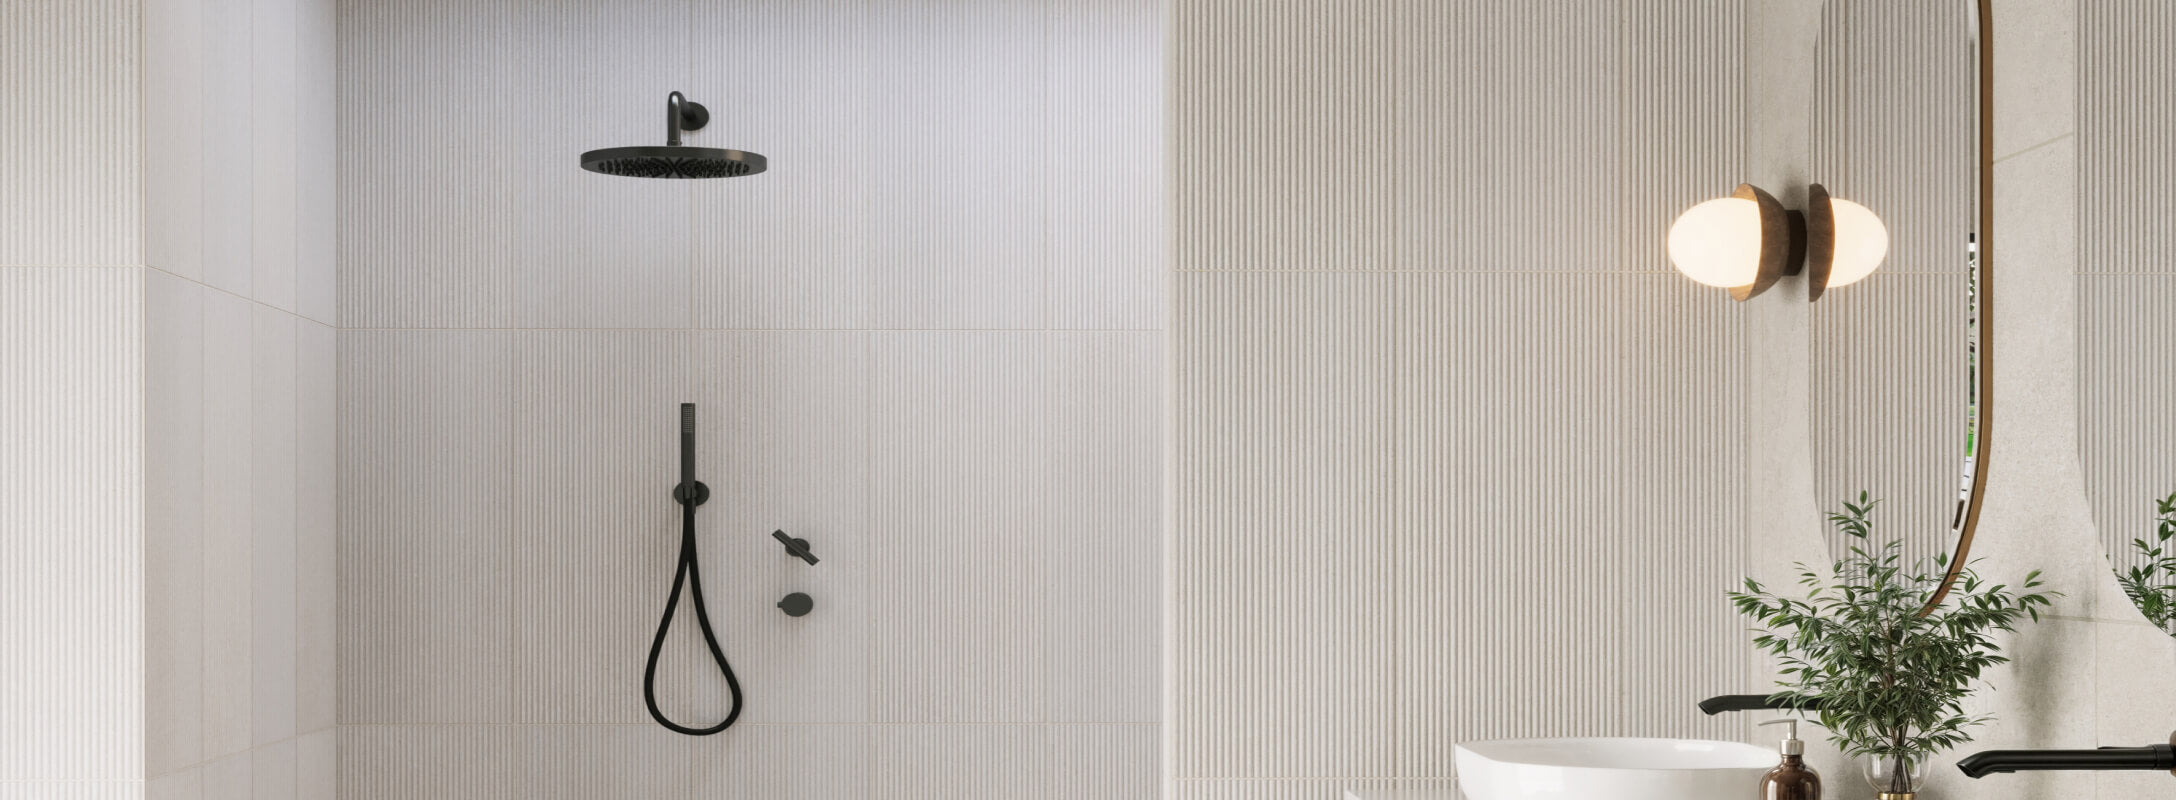 Modern bathroom featuring vertical white textured tiles, a sleek black shower head, and a globe wall light